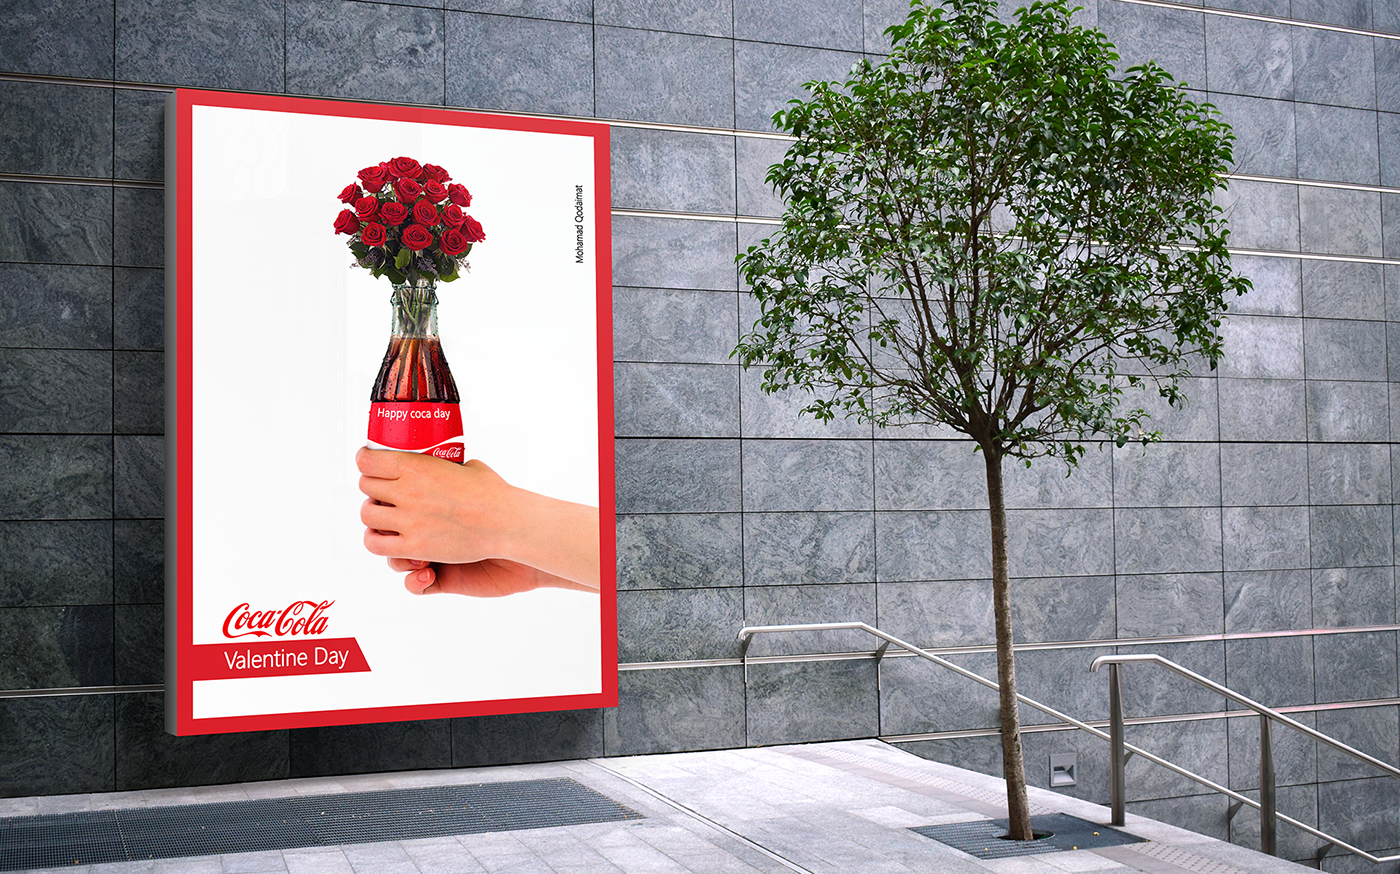 poster ads behance mcdonald's coca cola palestine duracell power adobe Mockup